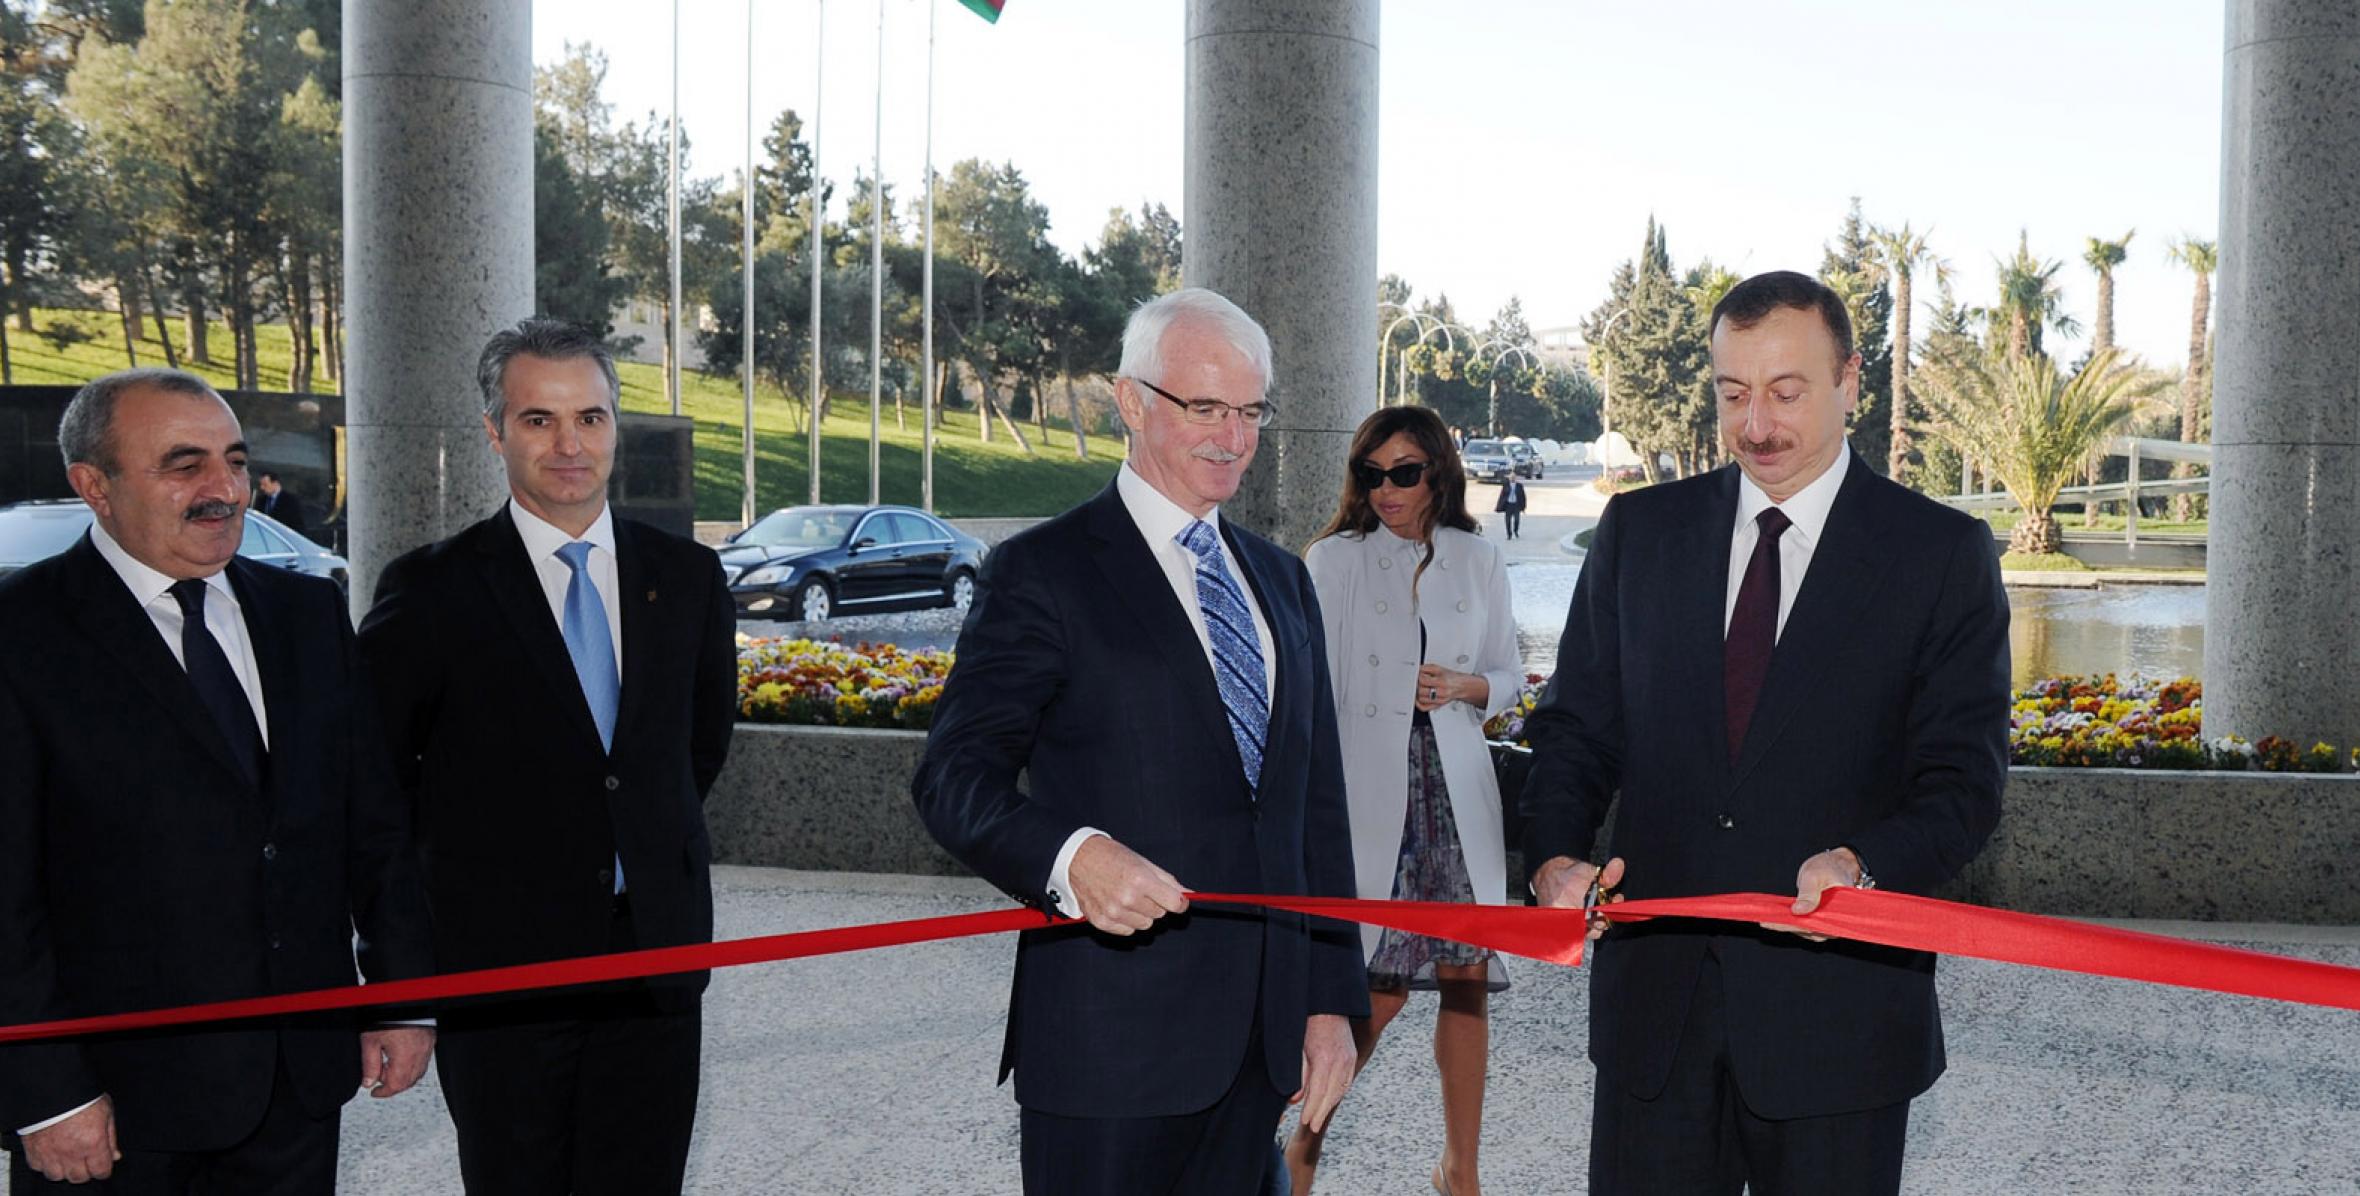 Ilham Aliyev attended the opening of the Jumeirah Bilgah Beach Hotel in Baku